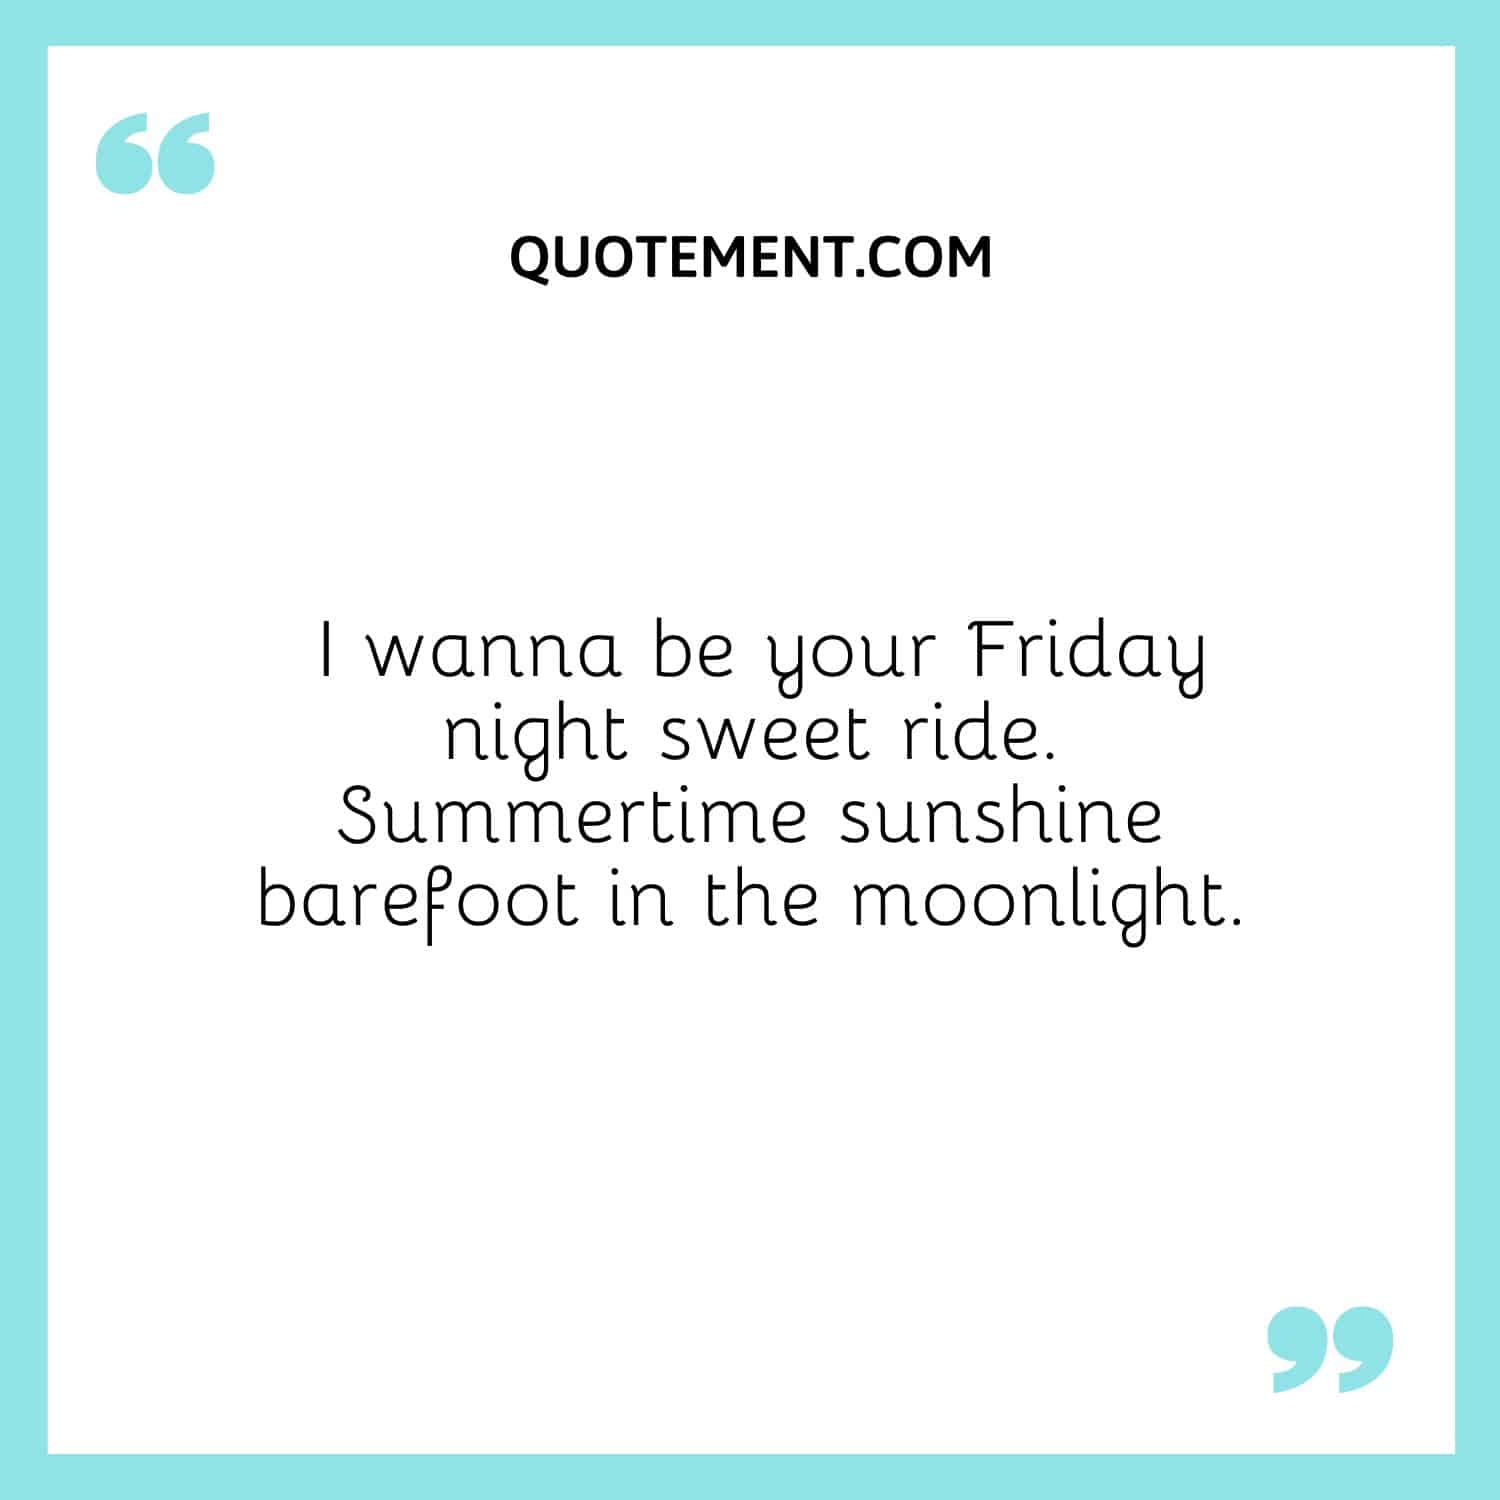 I wanna be your Friday night sweet ride